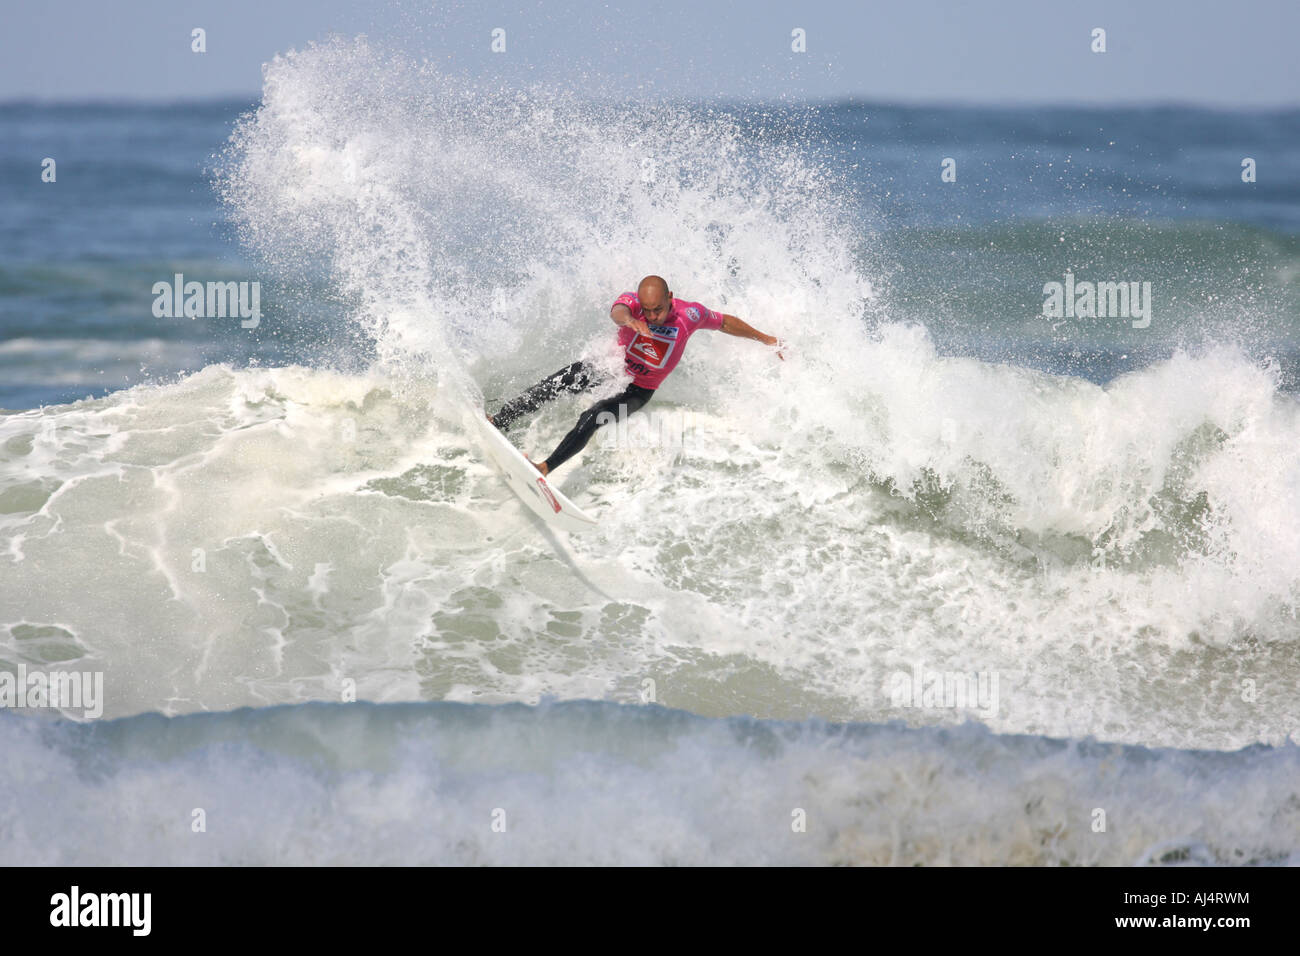 Pro Surfer Kelly Slater surfing a Wave Stock Photo